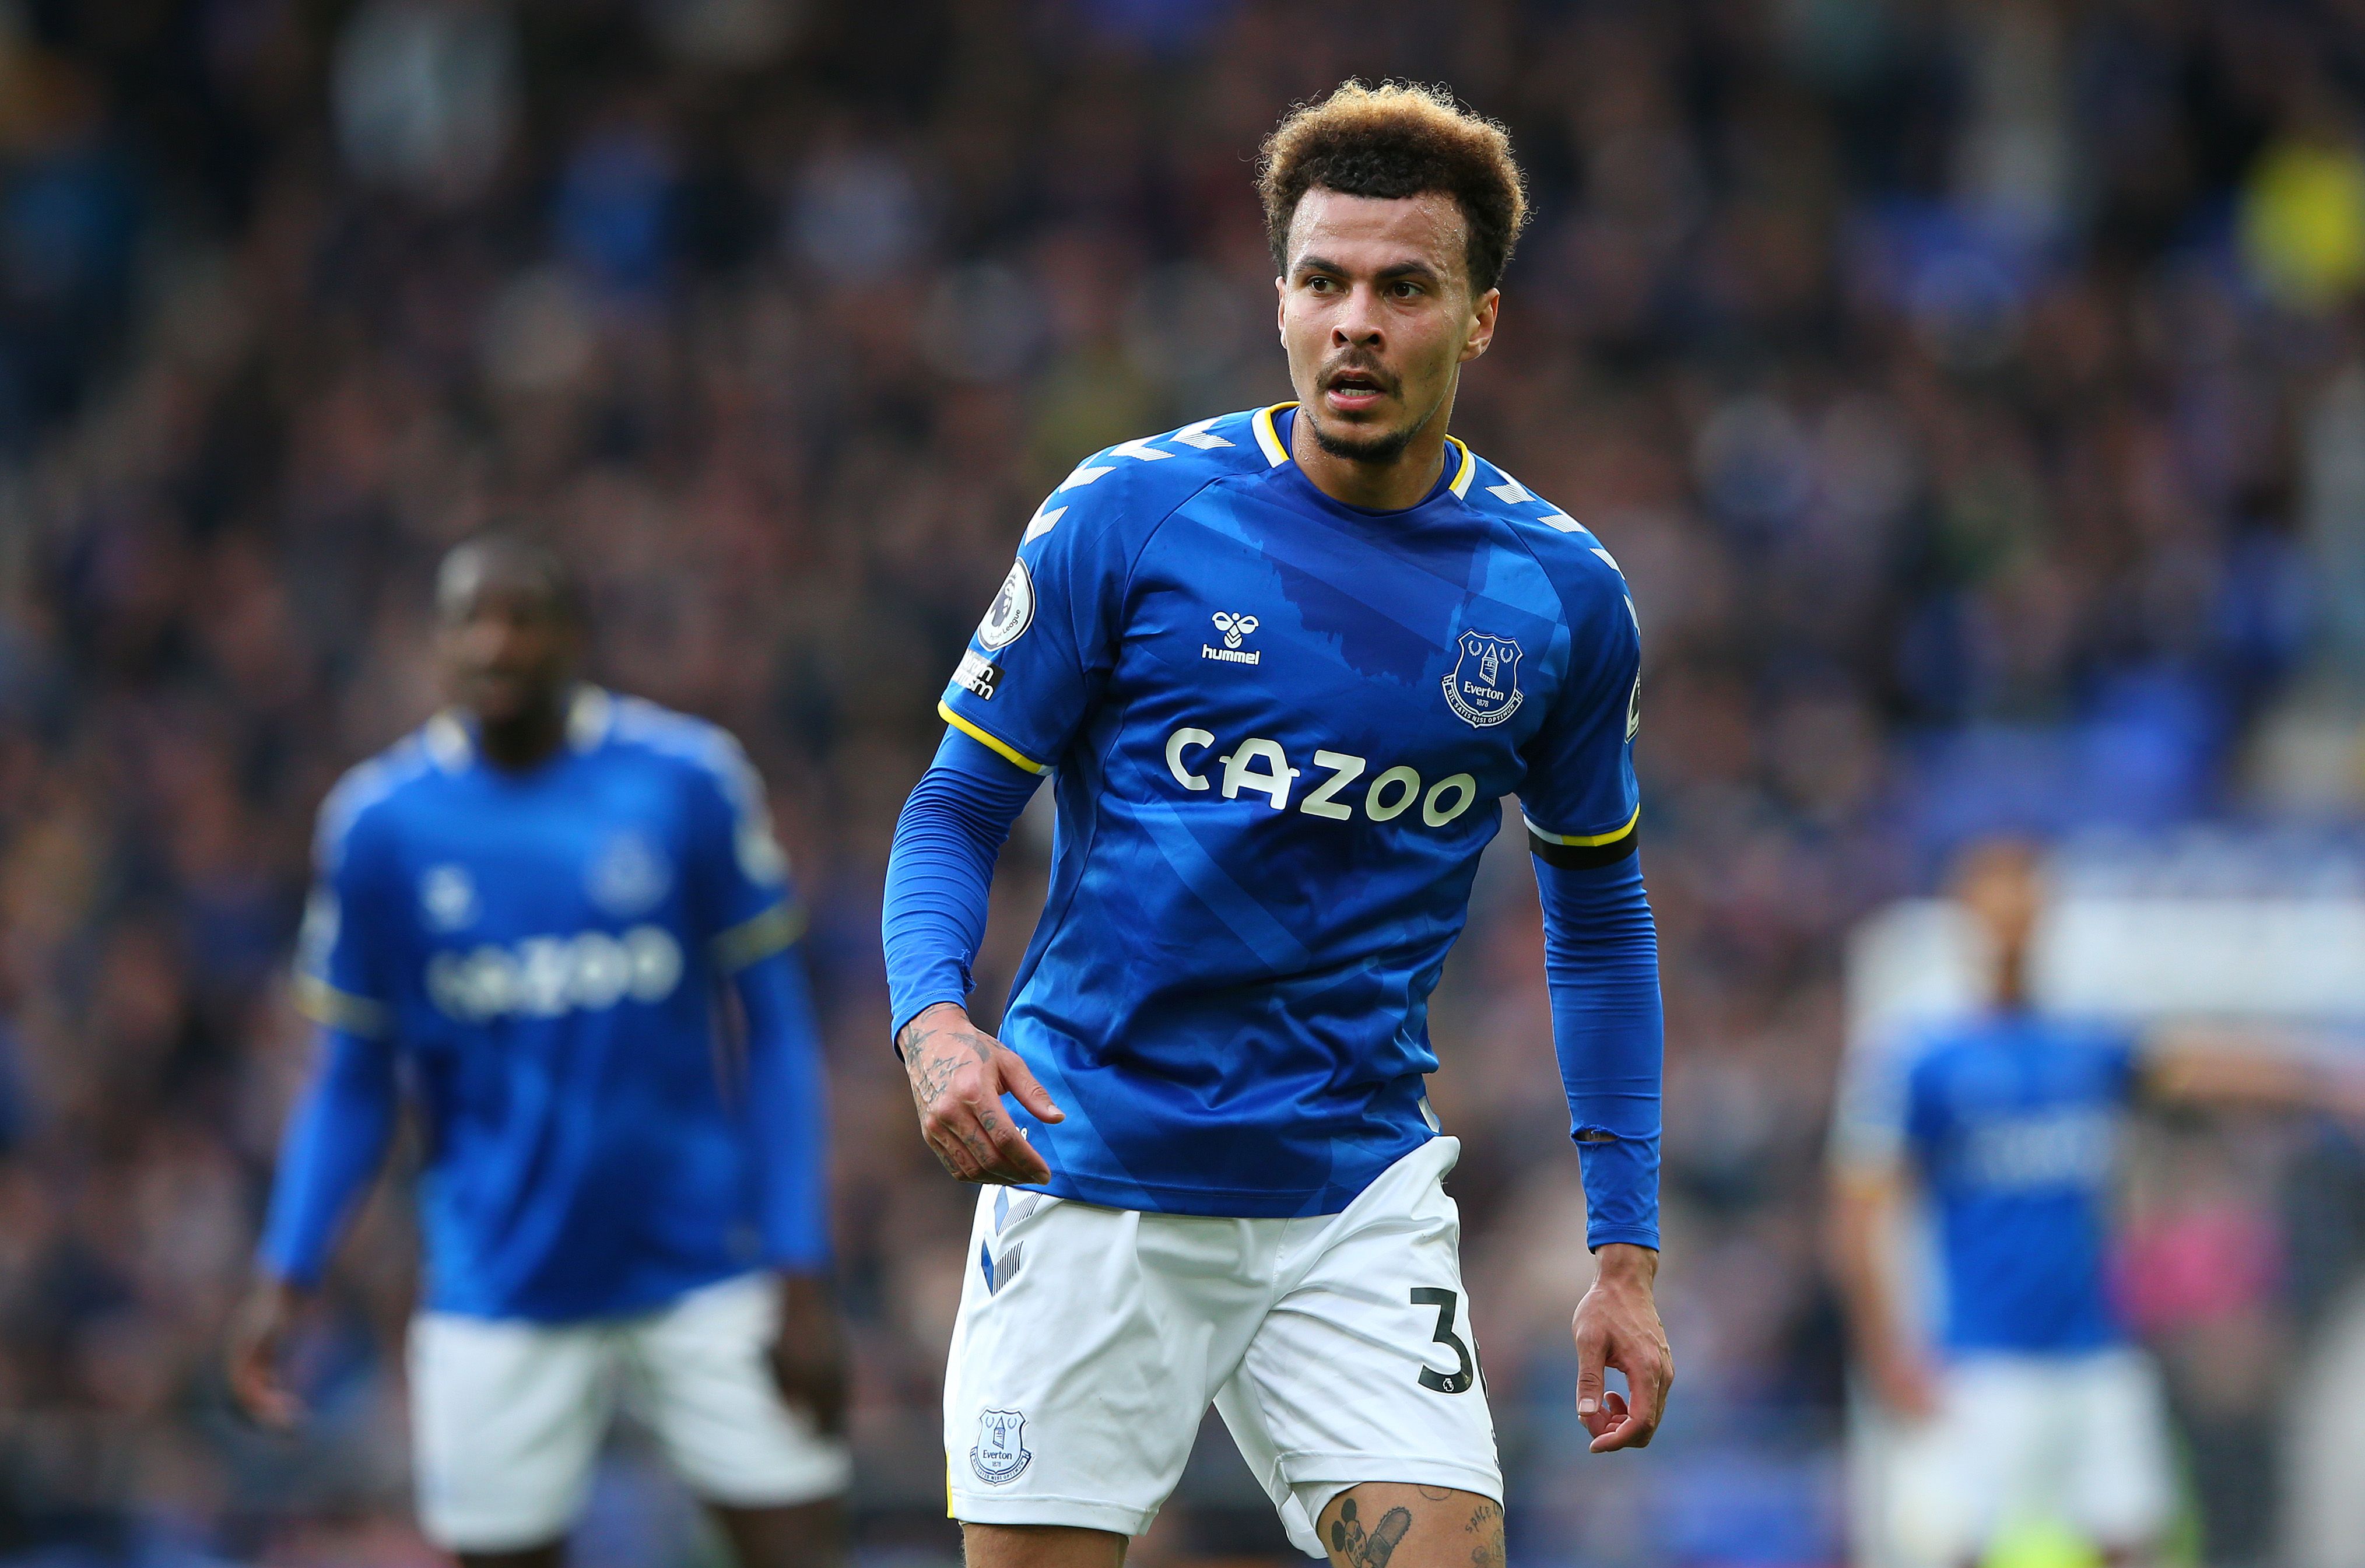 Dele signed for relegation-threatened Everton